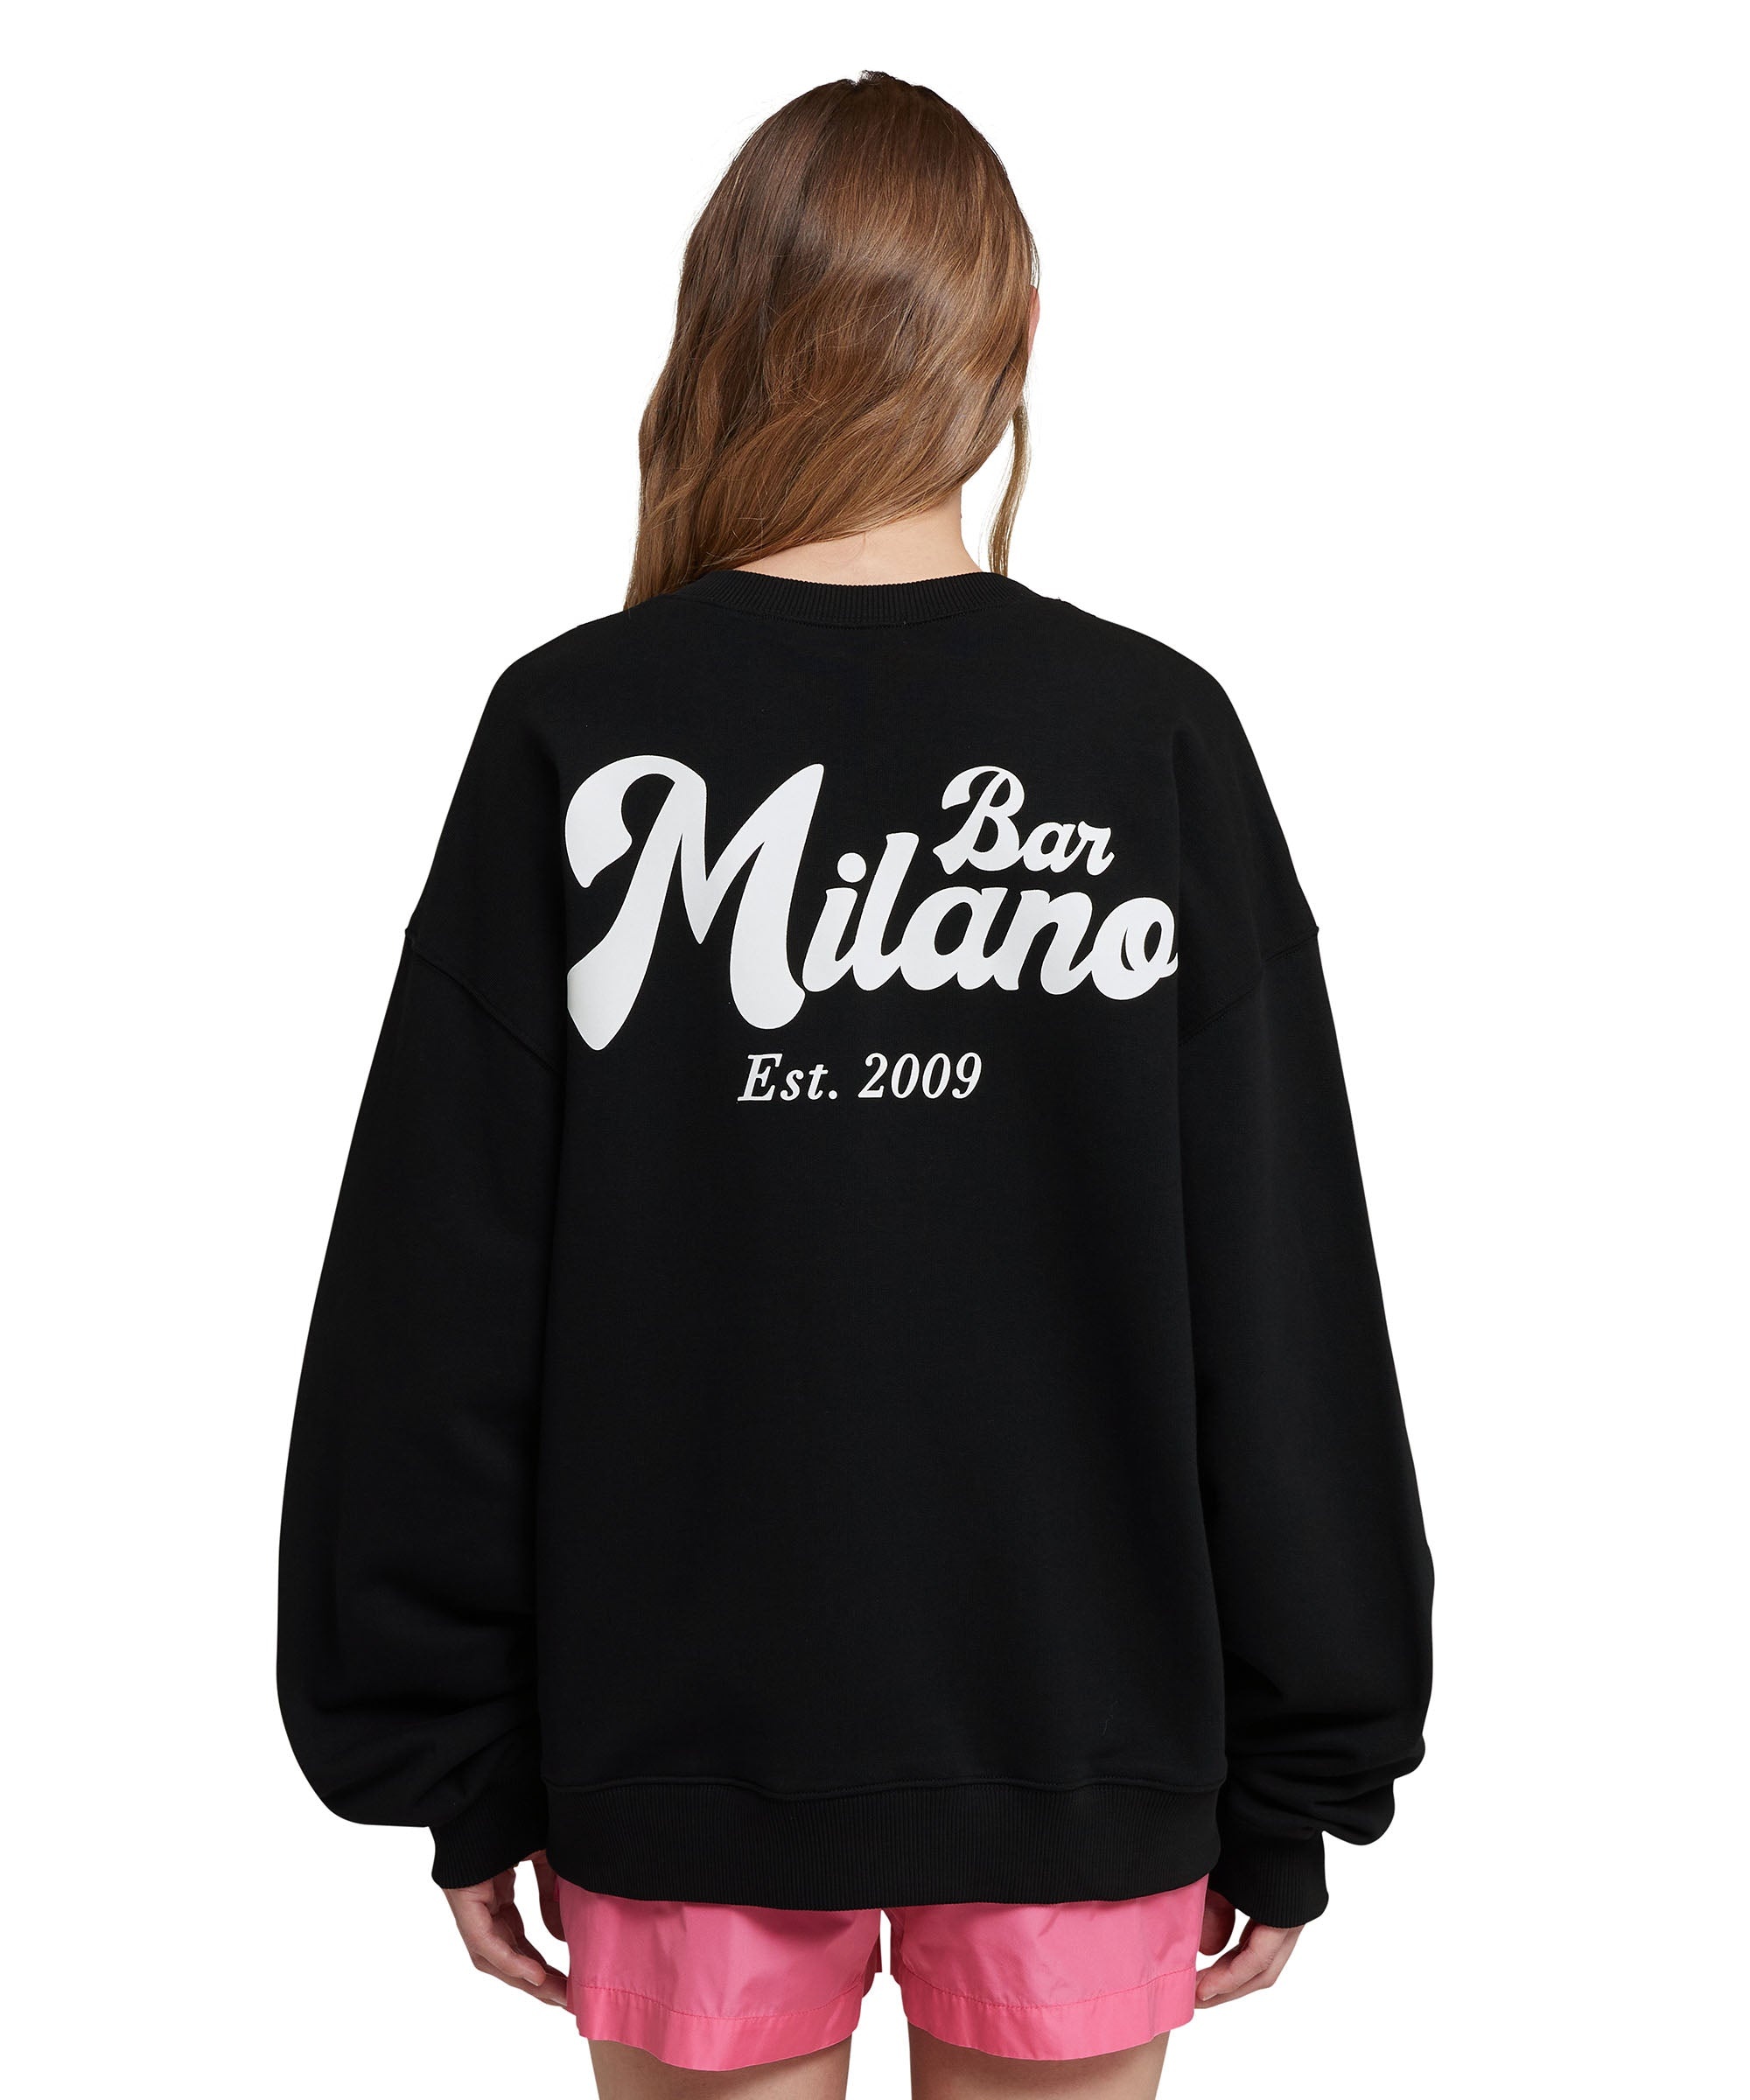 Sweatshirt with "bar Milano" graphic - 3